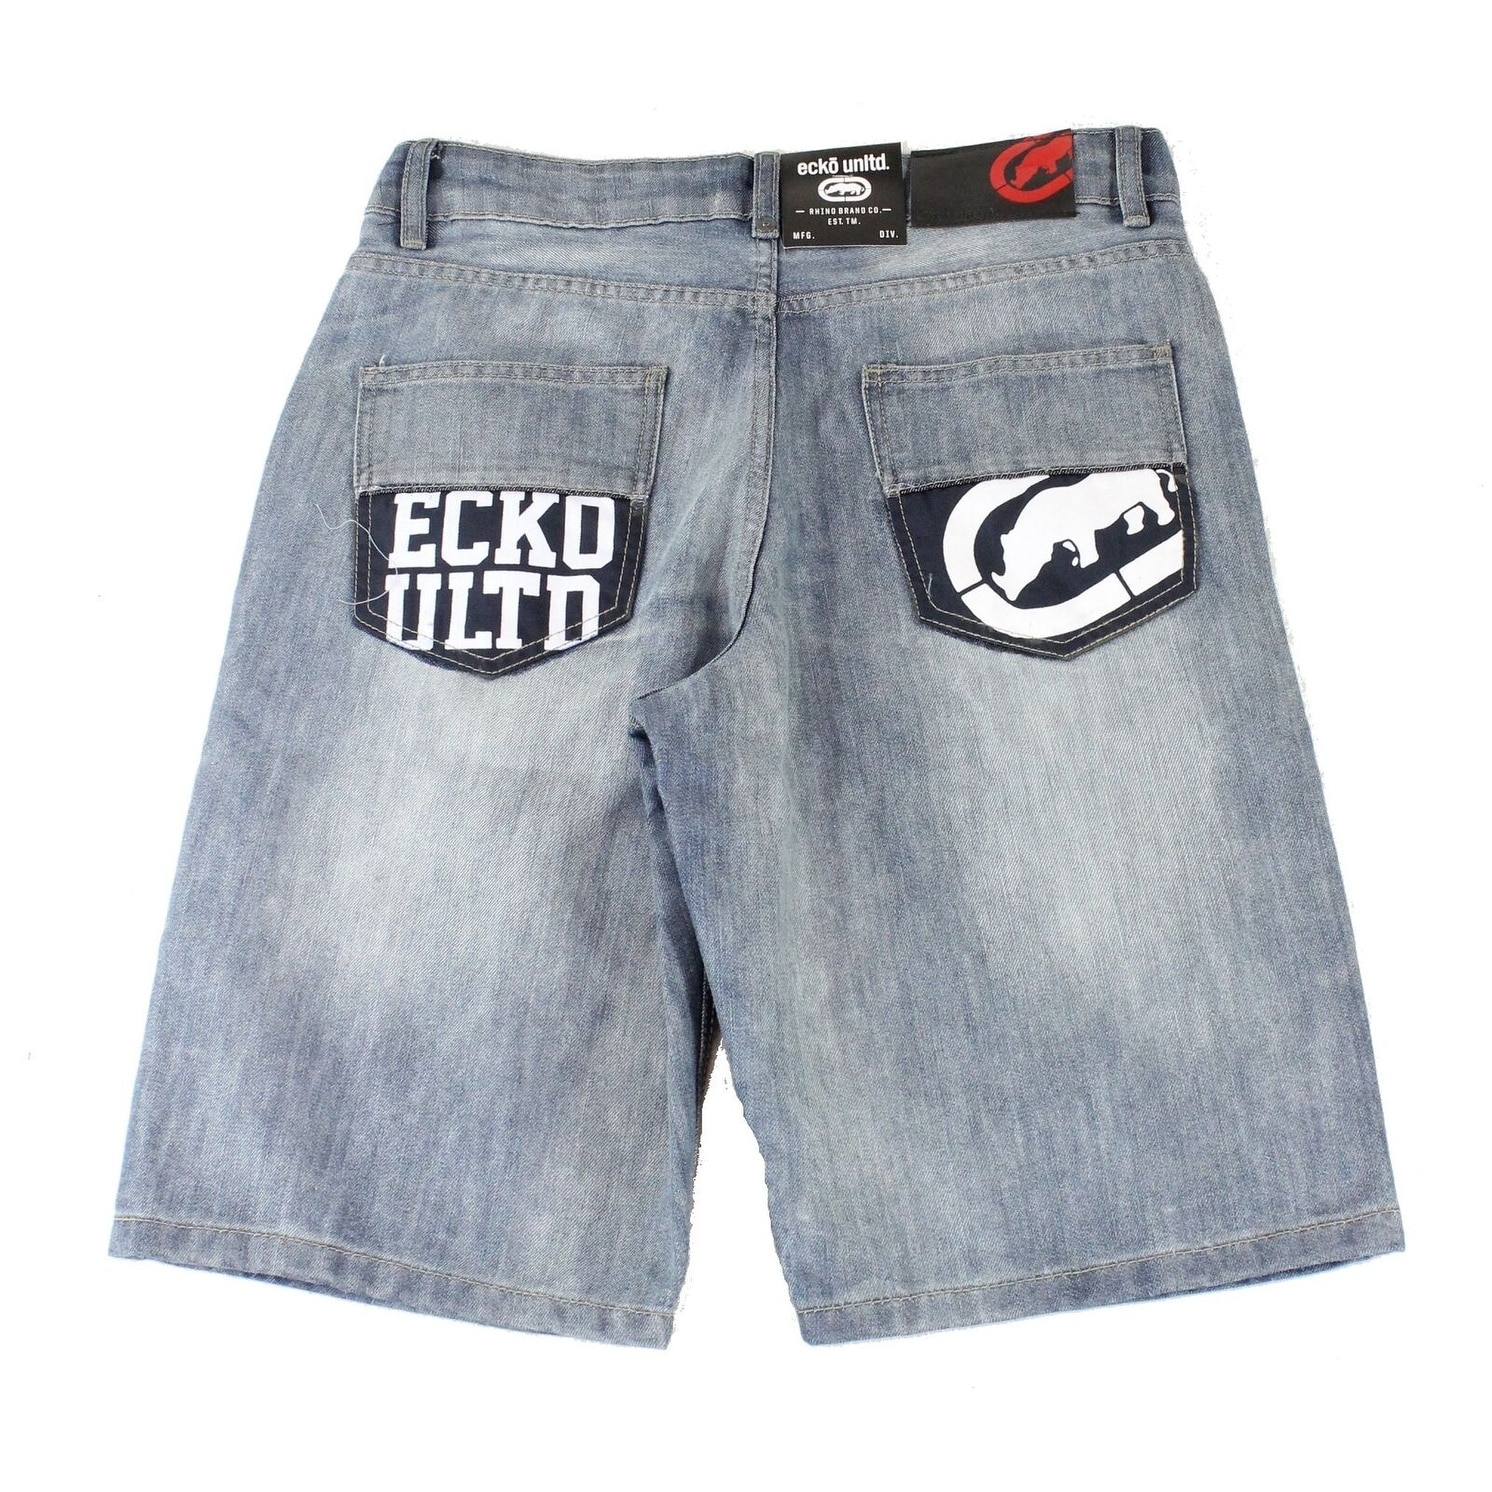 ecko unlimited jean shorts